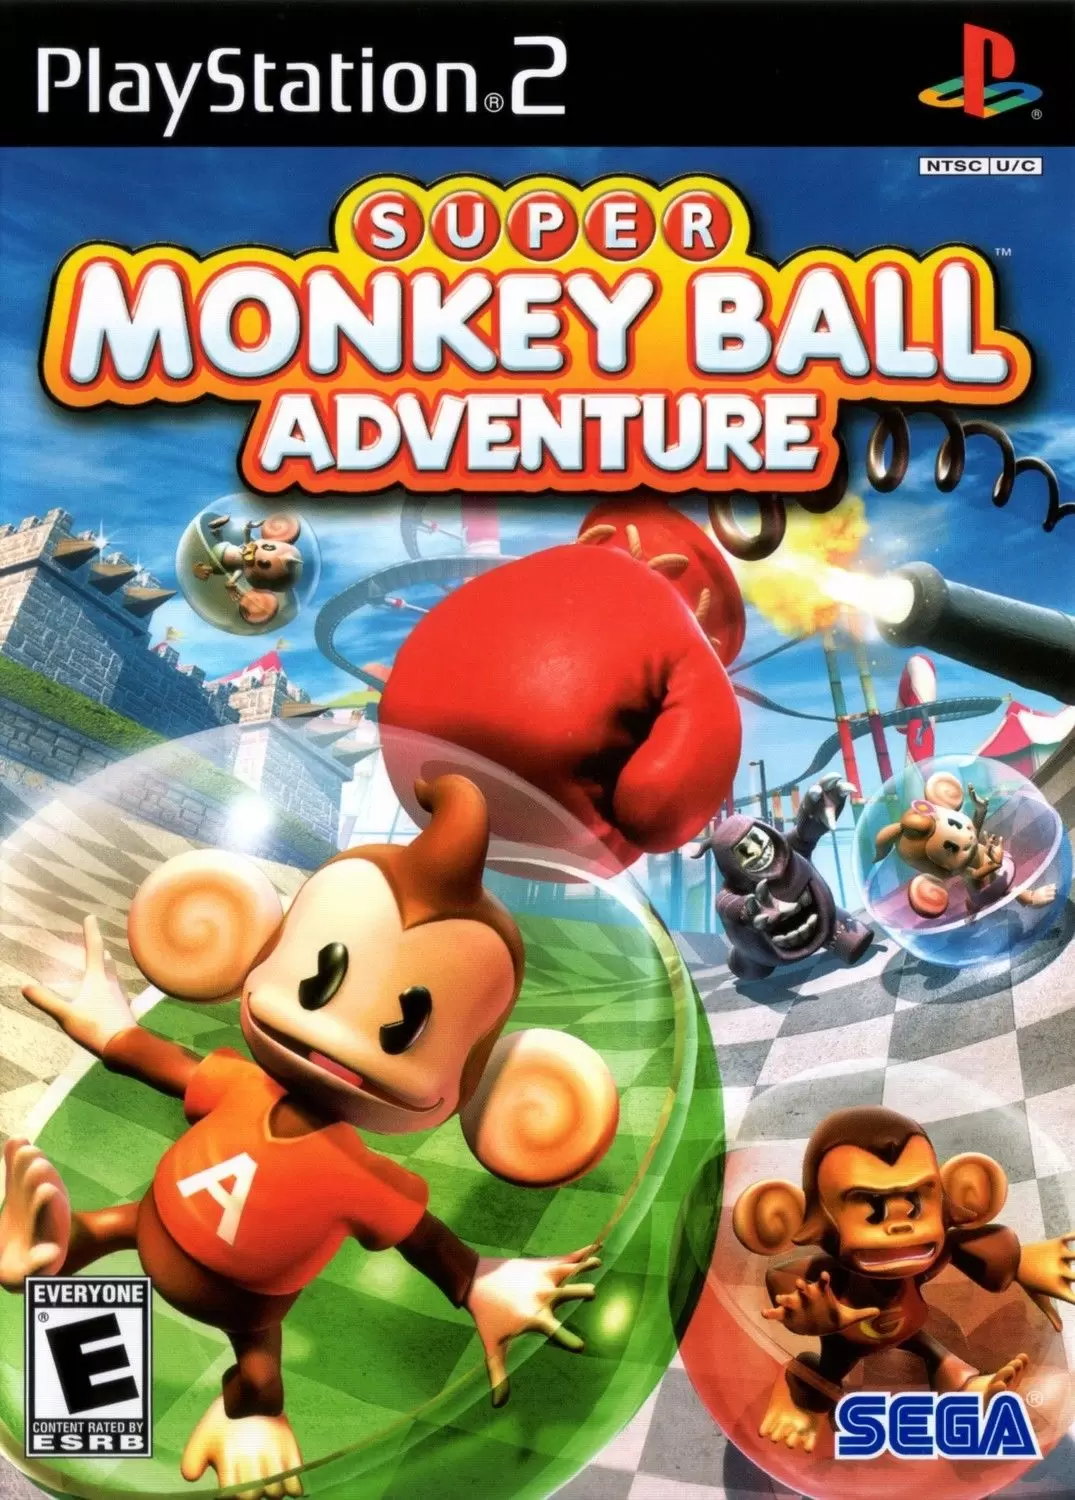 PS2 Games - Super Monkey Ball Adventure